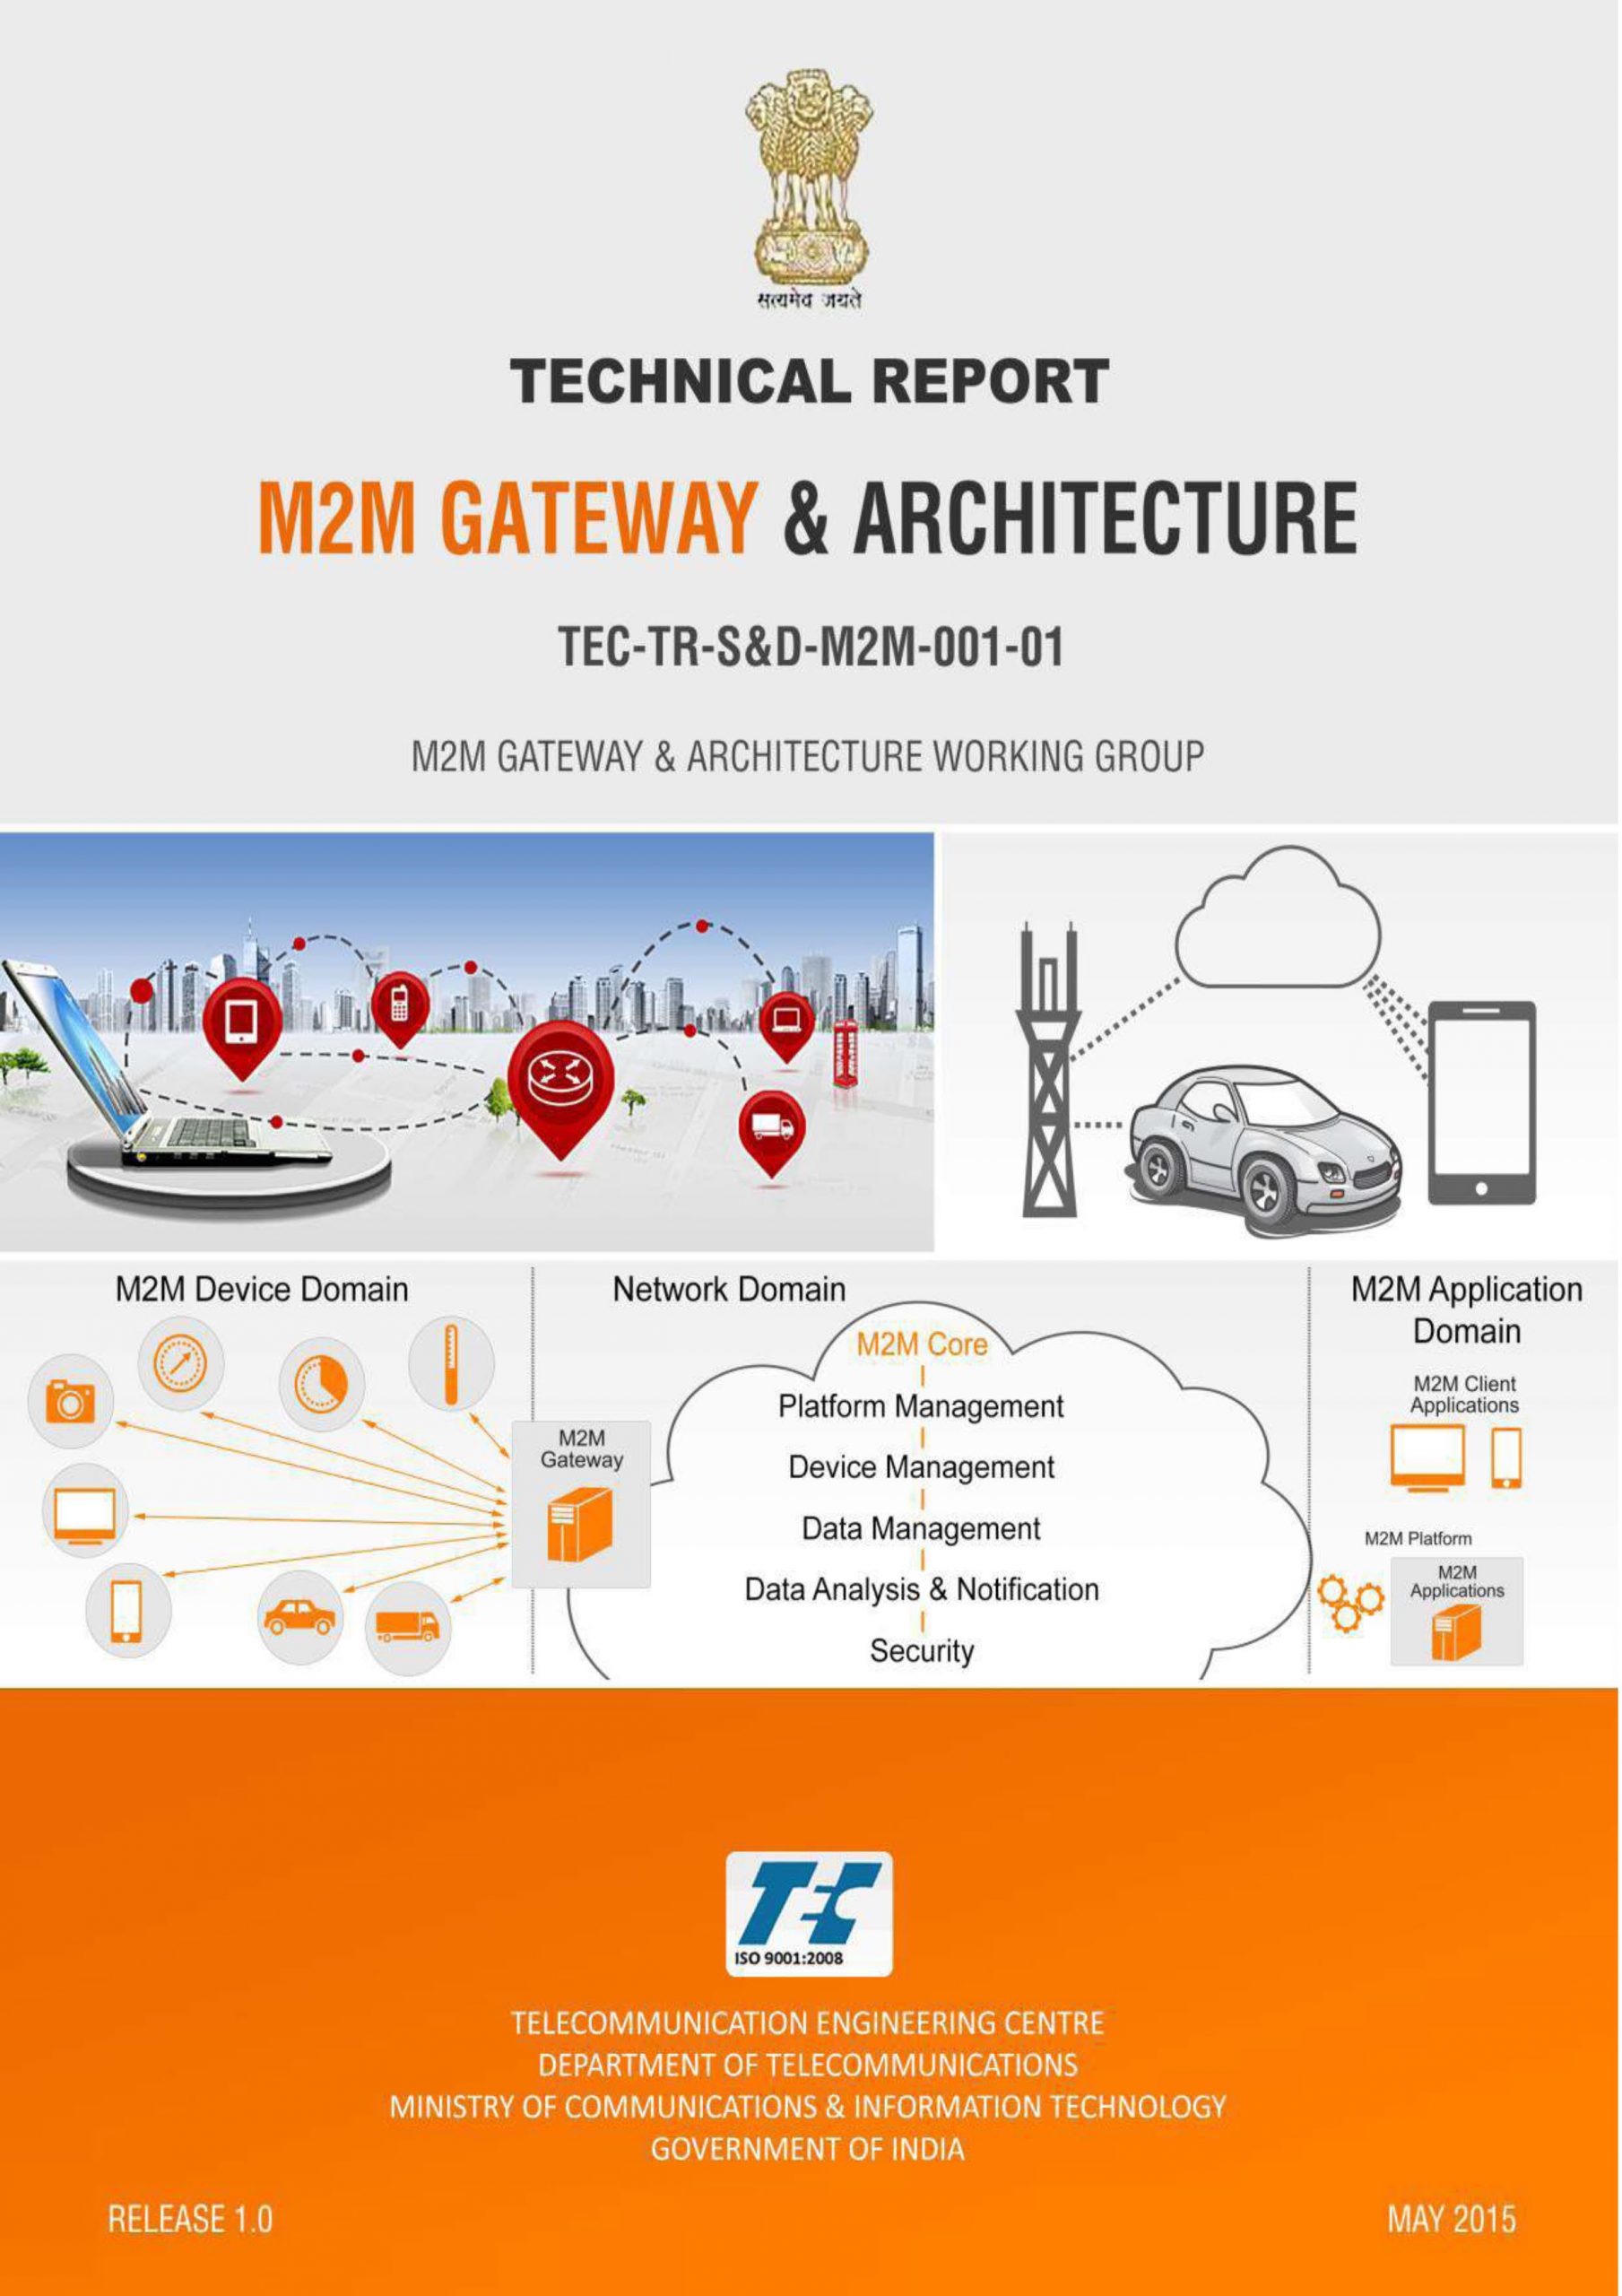 Technical report on M2M gateway